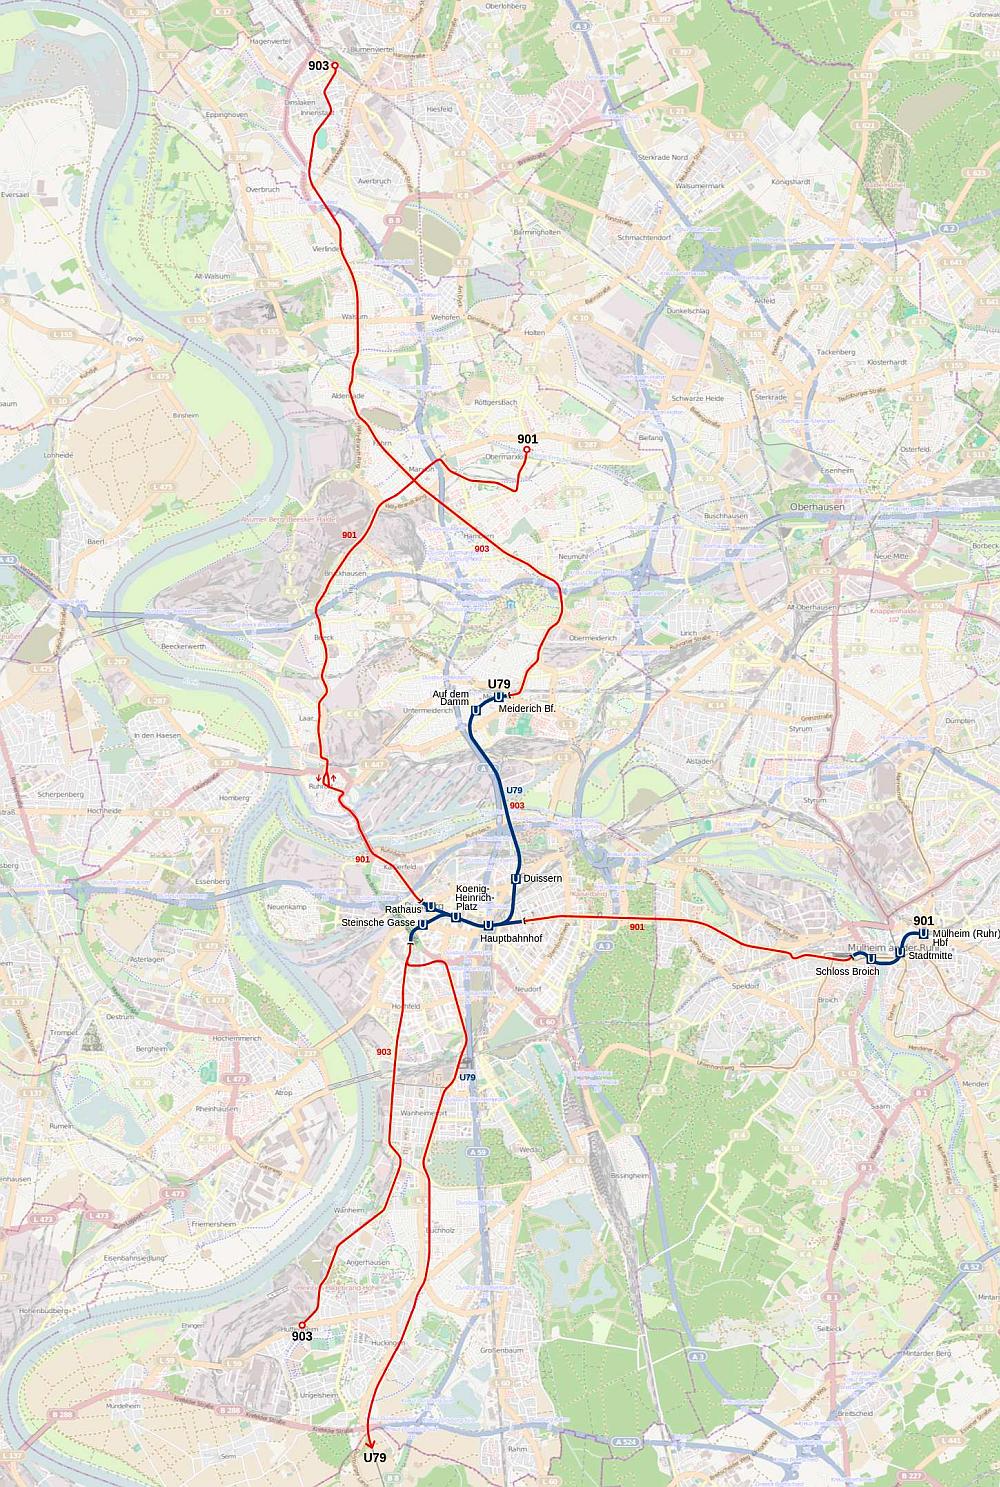 map of duisburg